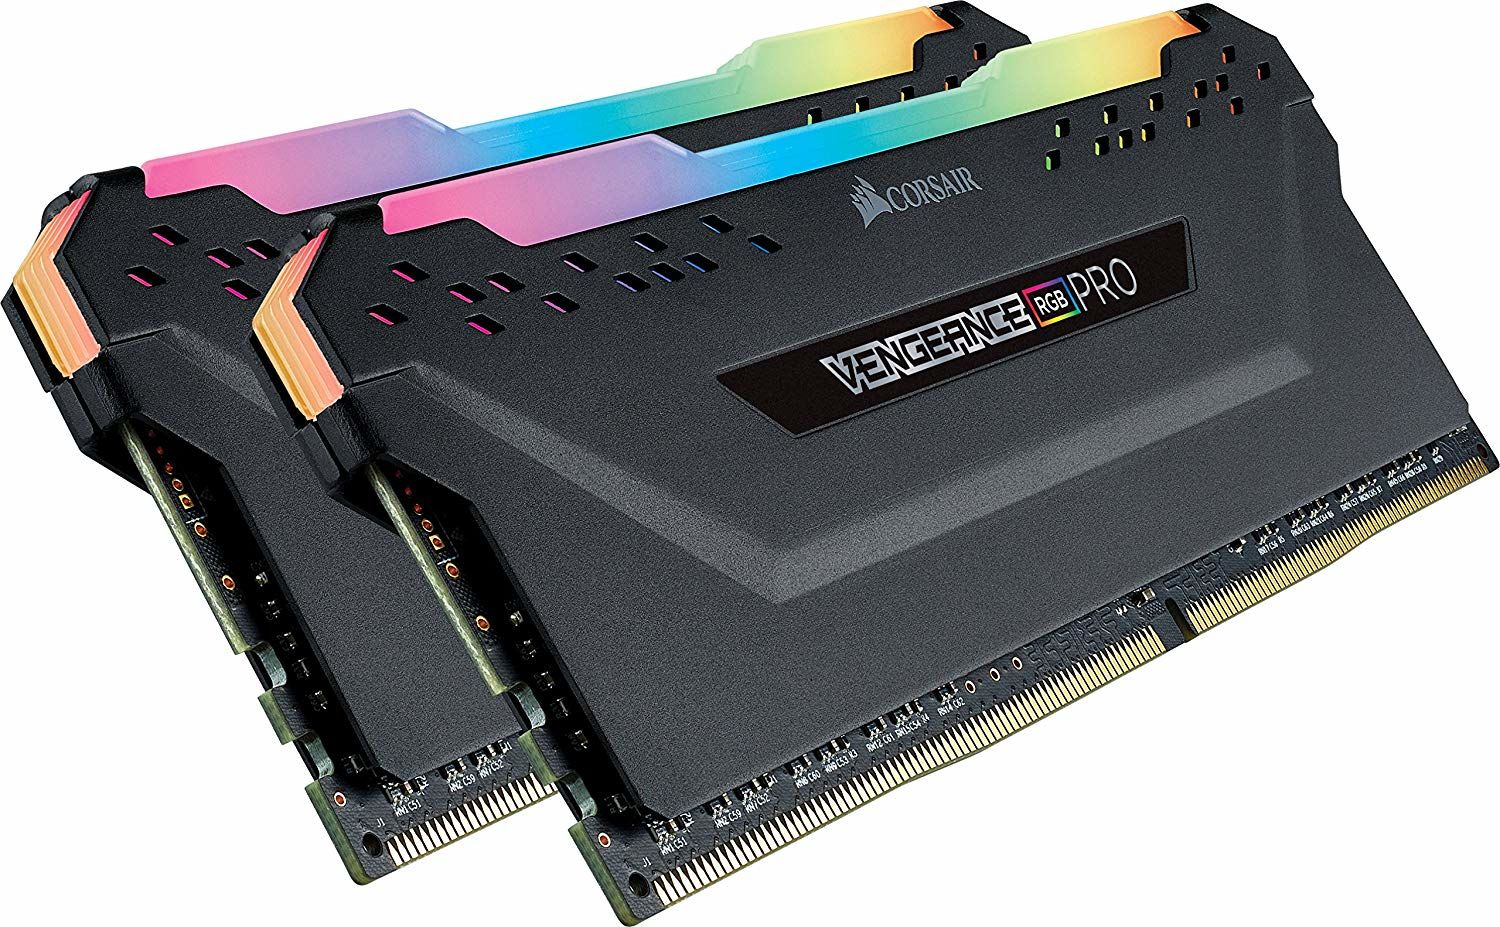 More information about "H Corsair κυκλοφορεί kit μνήμης Vengeance LPX DDR4 με ταχύτητες μέχρι 4.866ΜΗz για Ryzen"